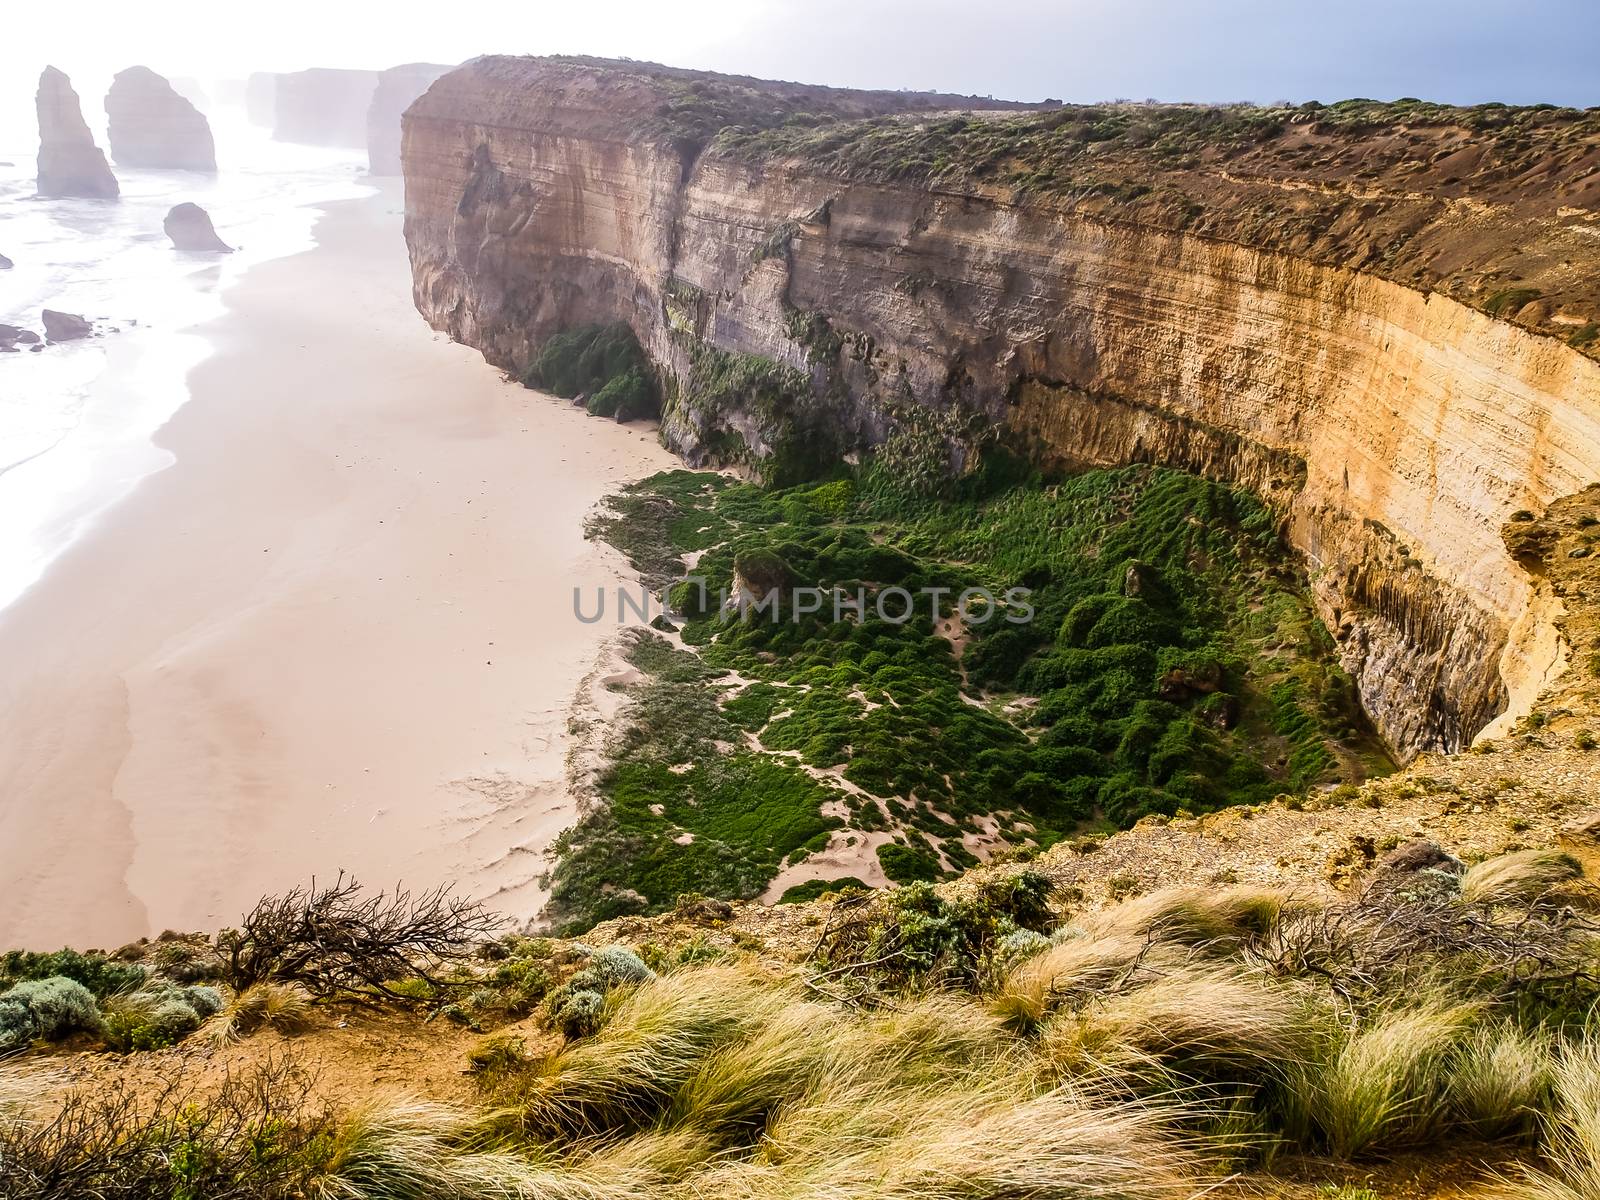 Twelve Apostles, famous landmark along the Great Ocean Road. Tourist attraction and travel destination along Australian coastline, Victoria, Australia